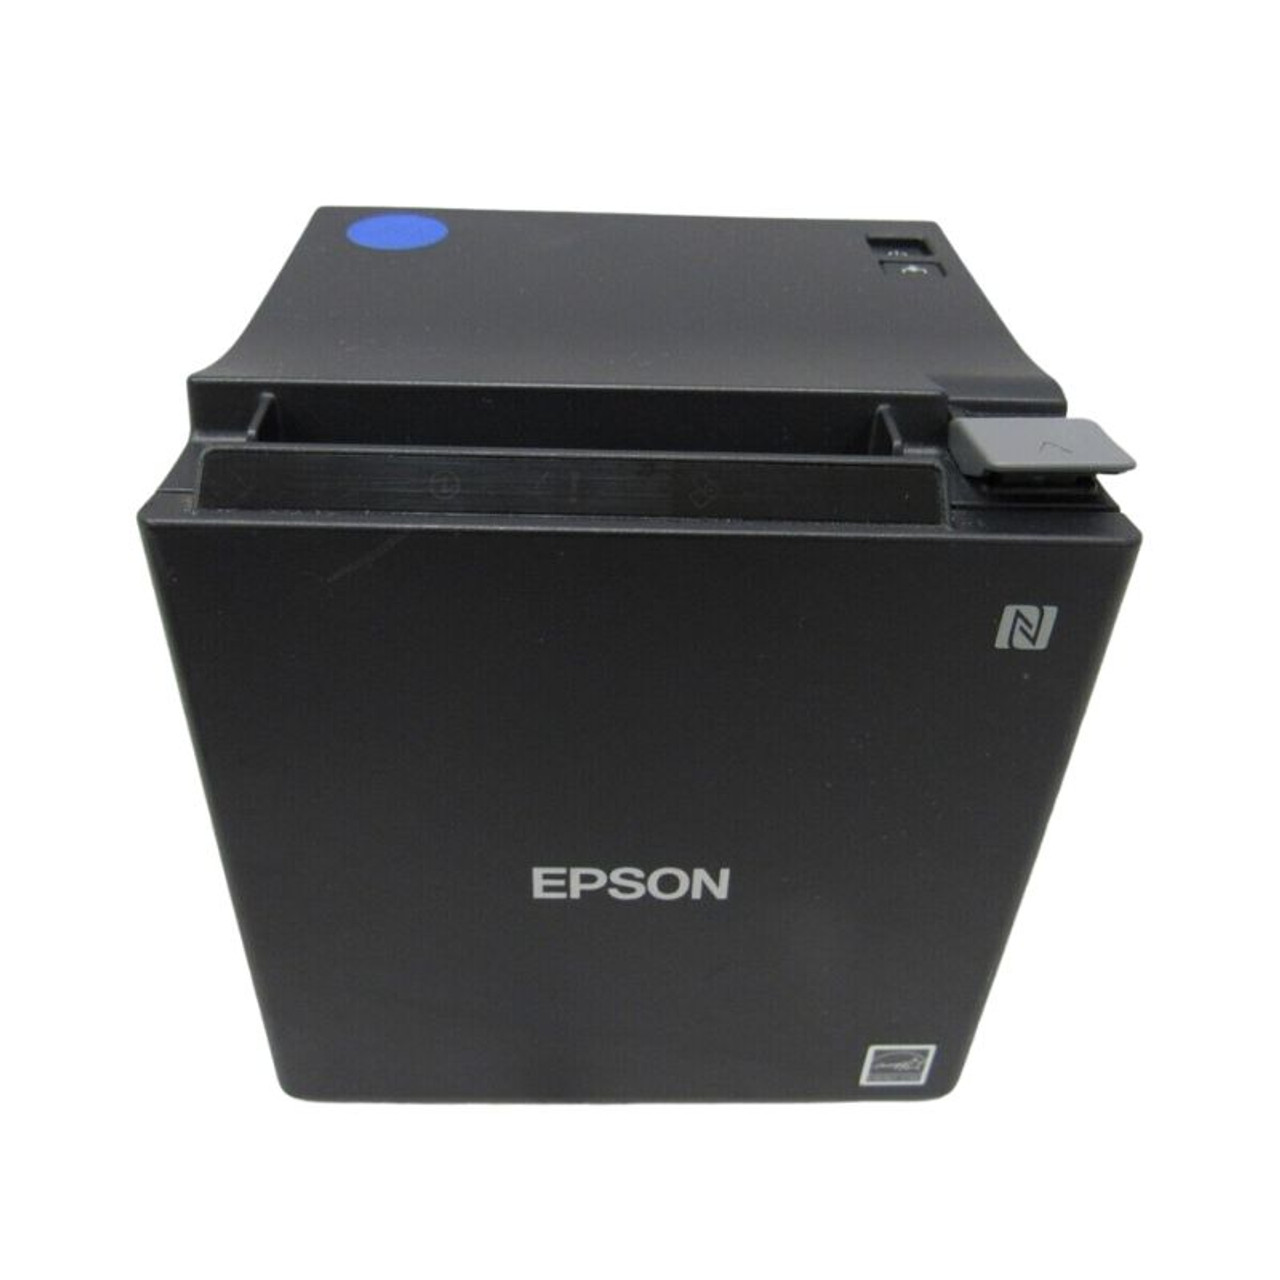 Epson TM-M30 Model M335A Pos Printer w/ USB & Ethernet Port